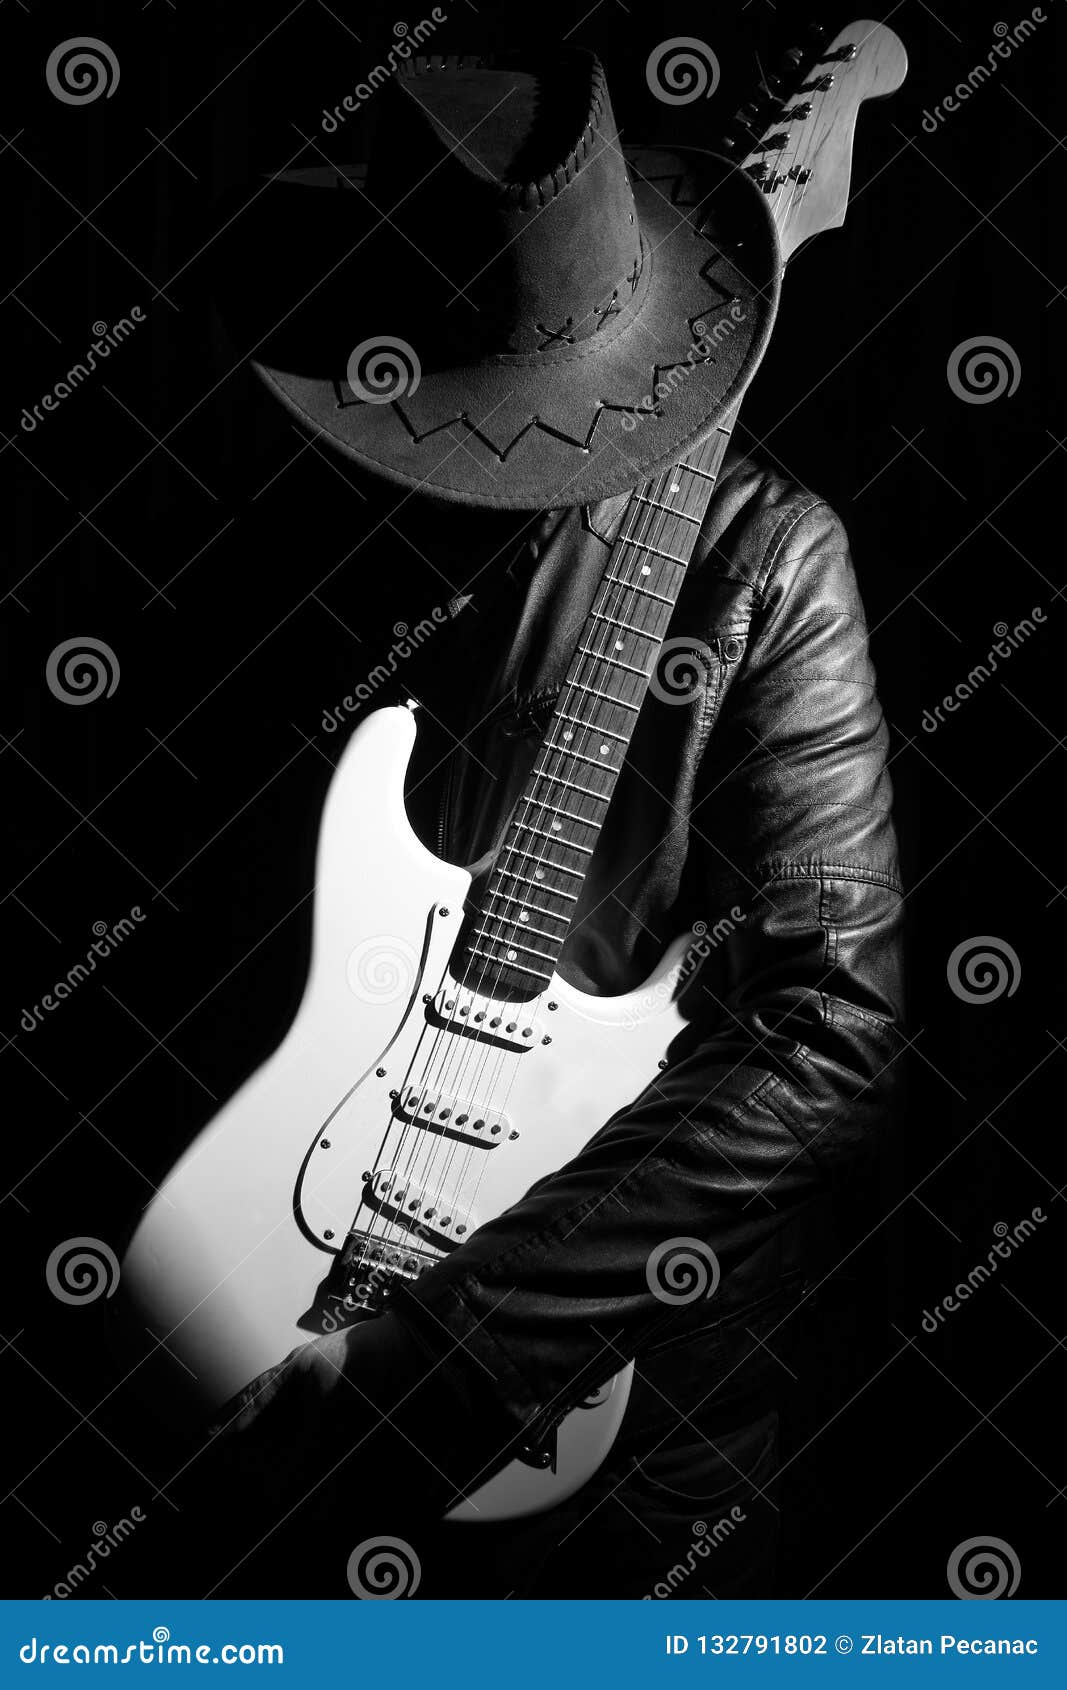 guitarist portrait